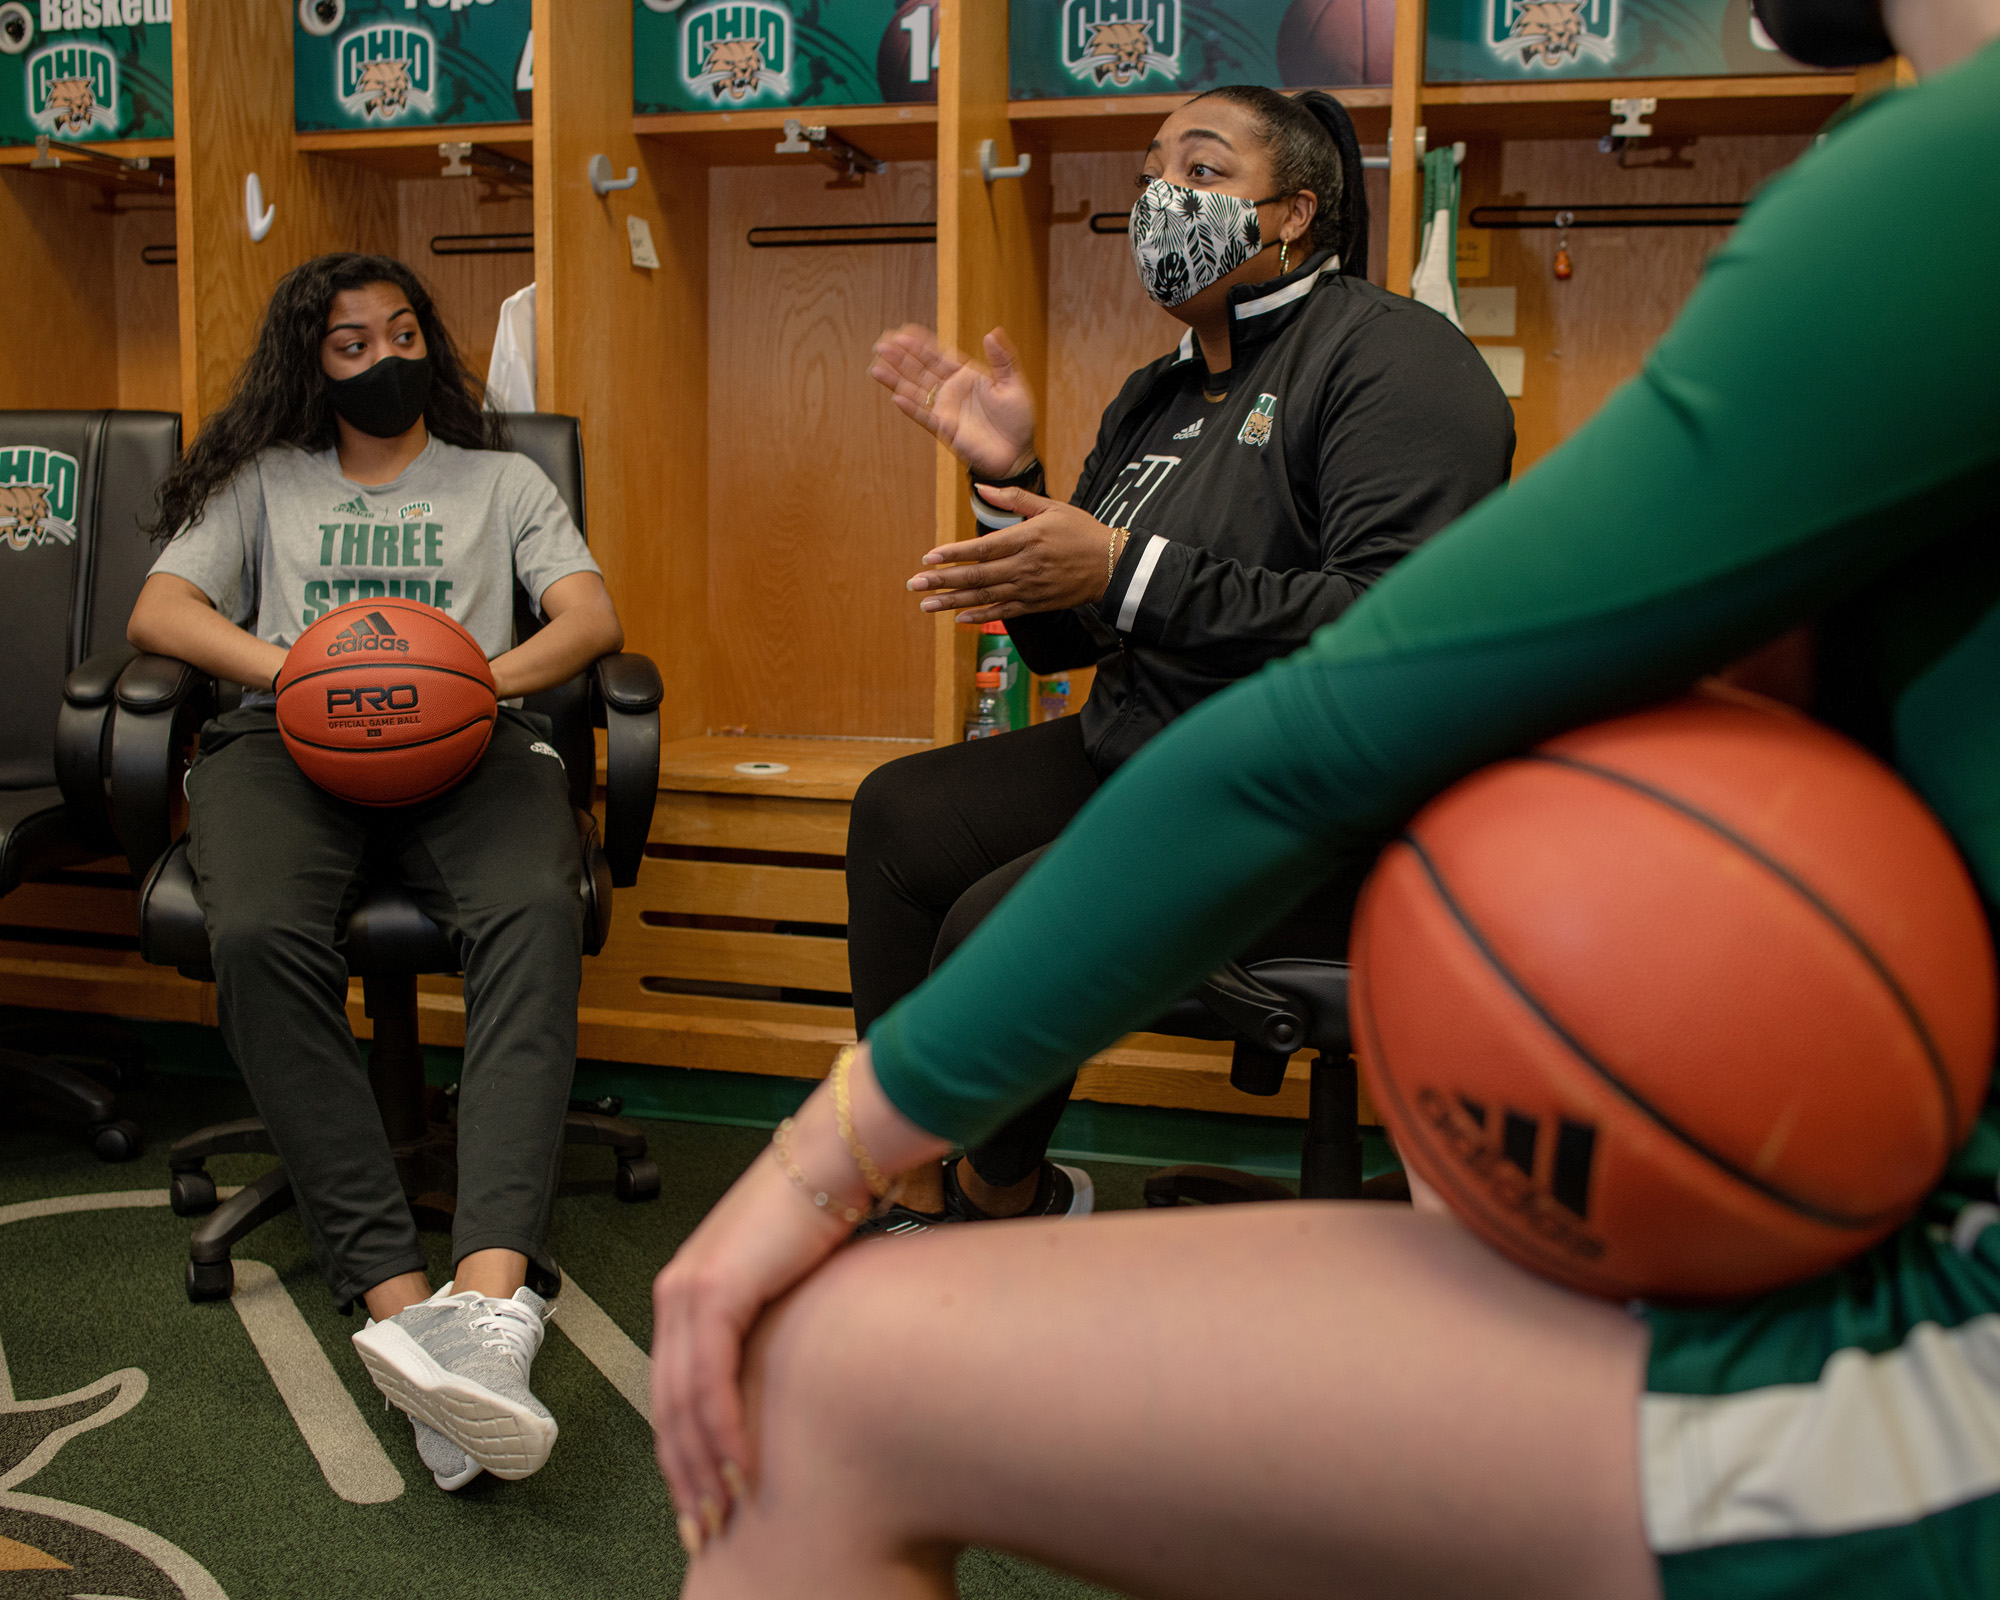 Ohio University women's basketball players having a locker room discussion